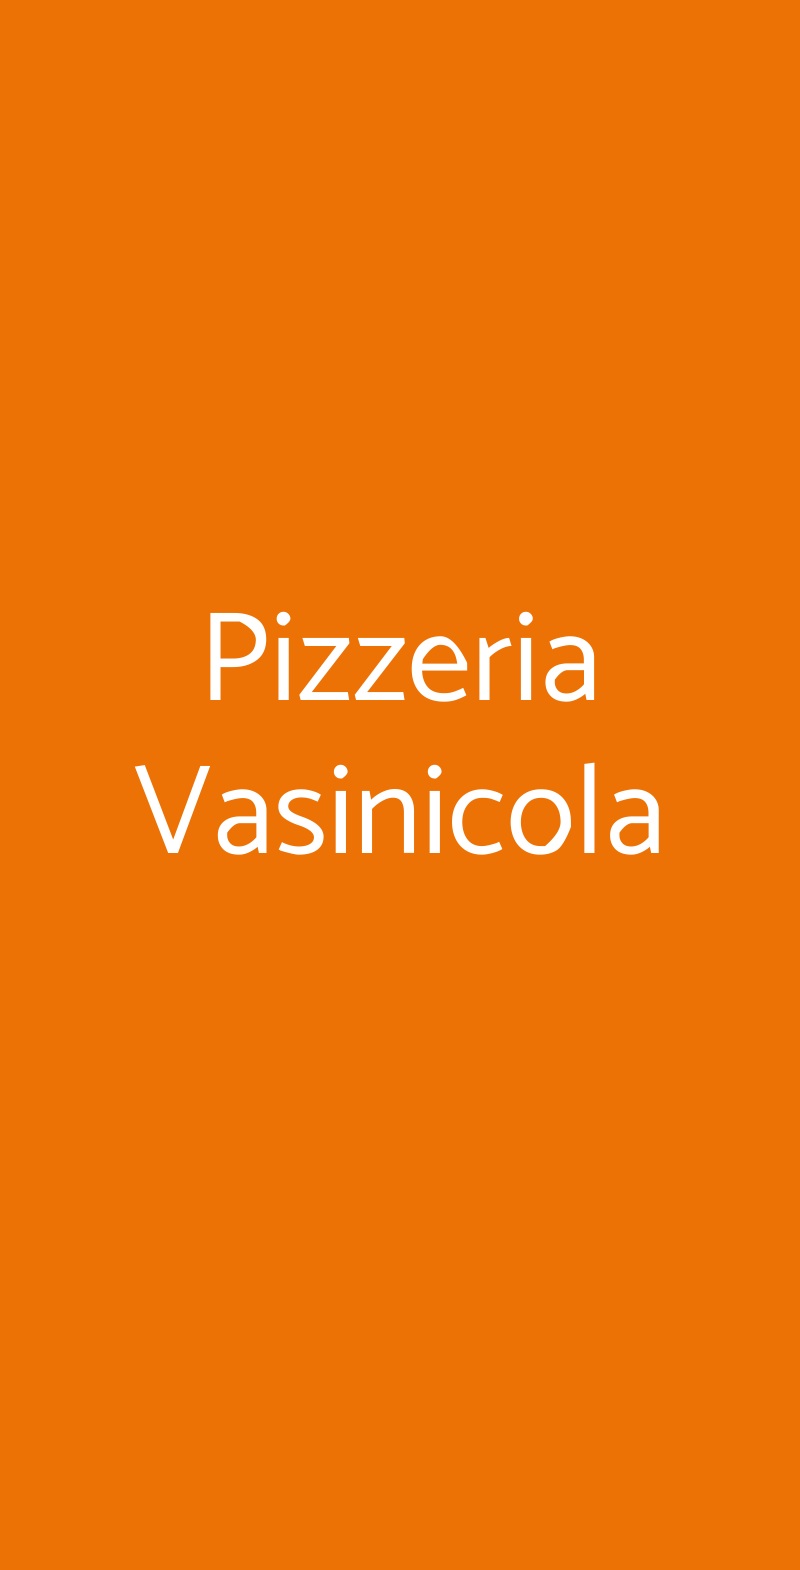 Pizzeria Vasinicola Napoli menù 1 pagina